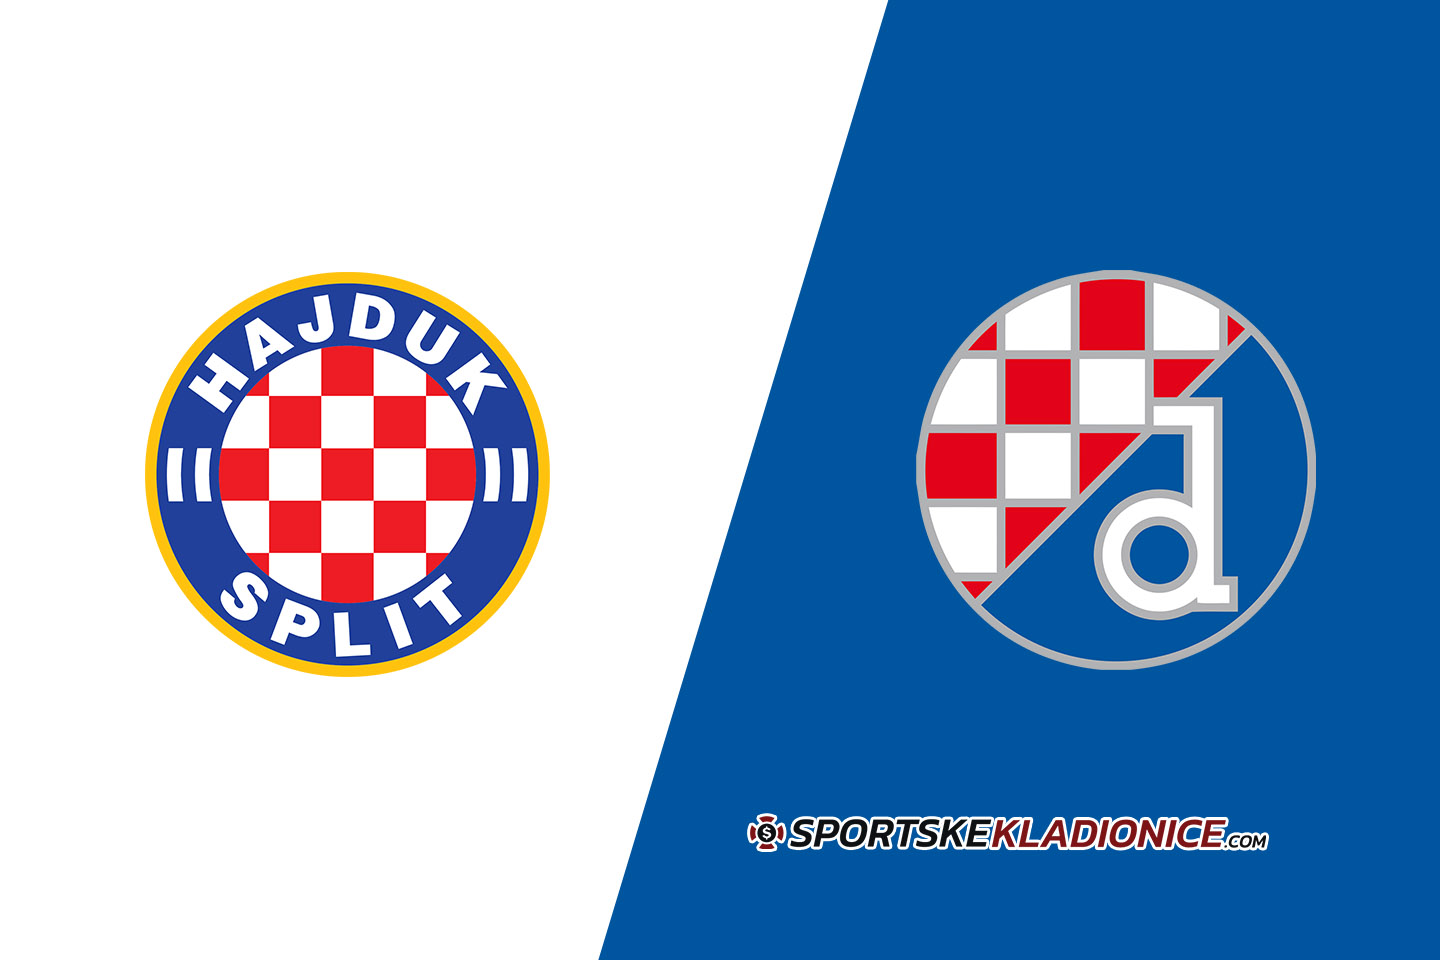 GNK Dinamo Zagreb - [HT PRVA LIGA] 1' Počinje utakmica protiv HNK Hajduk  Split! AJMOOO DINAMO! 🔵🔵💪